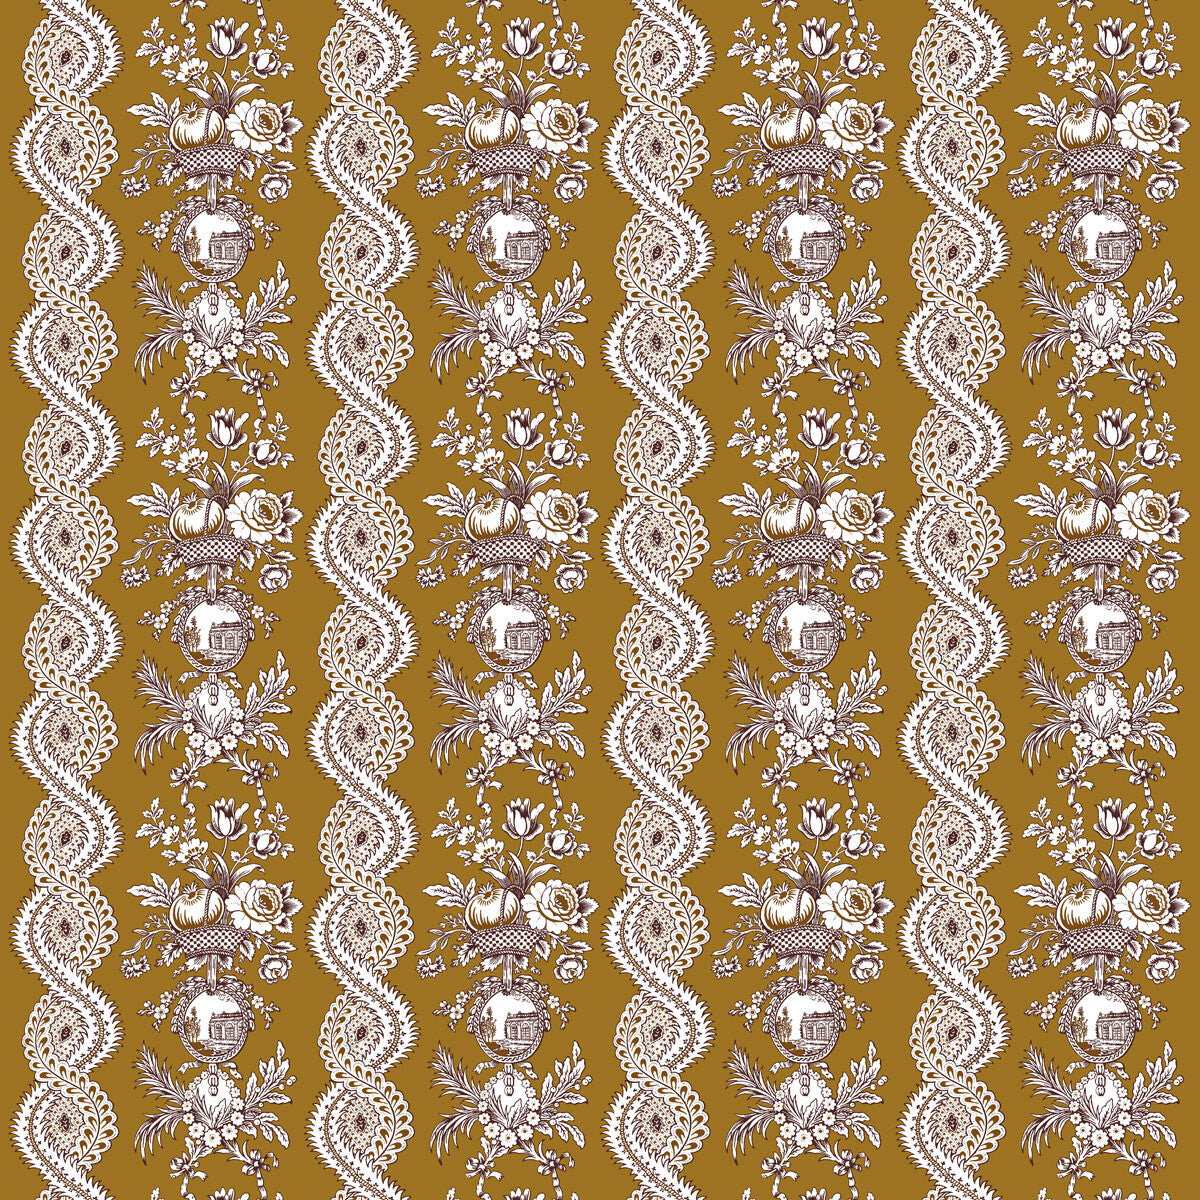 Pilara fabric in ocre color - pattern LCT1059.003.0 - by Gaston y Daniela in the Lorenzo Castillo VI collection